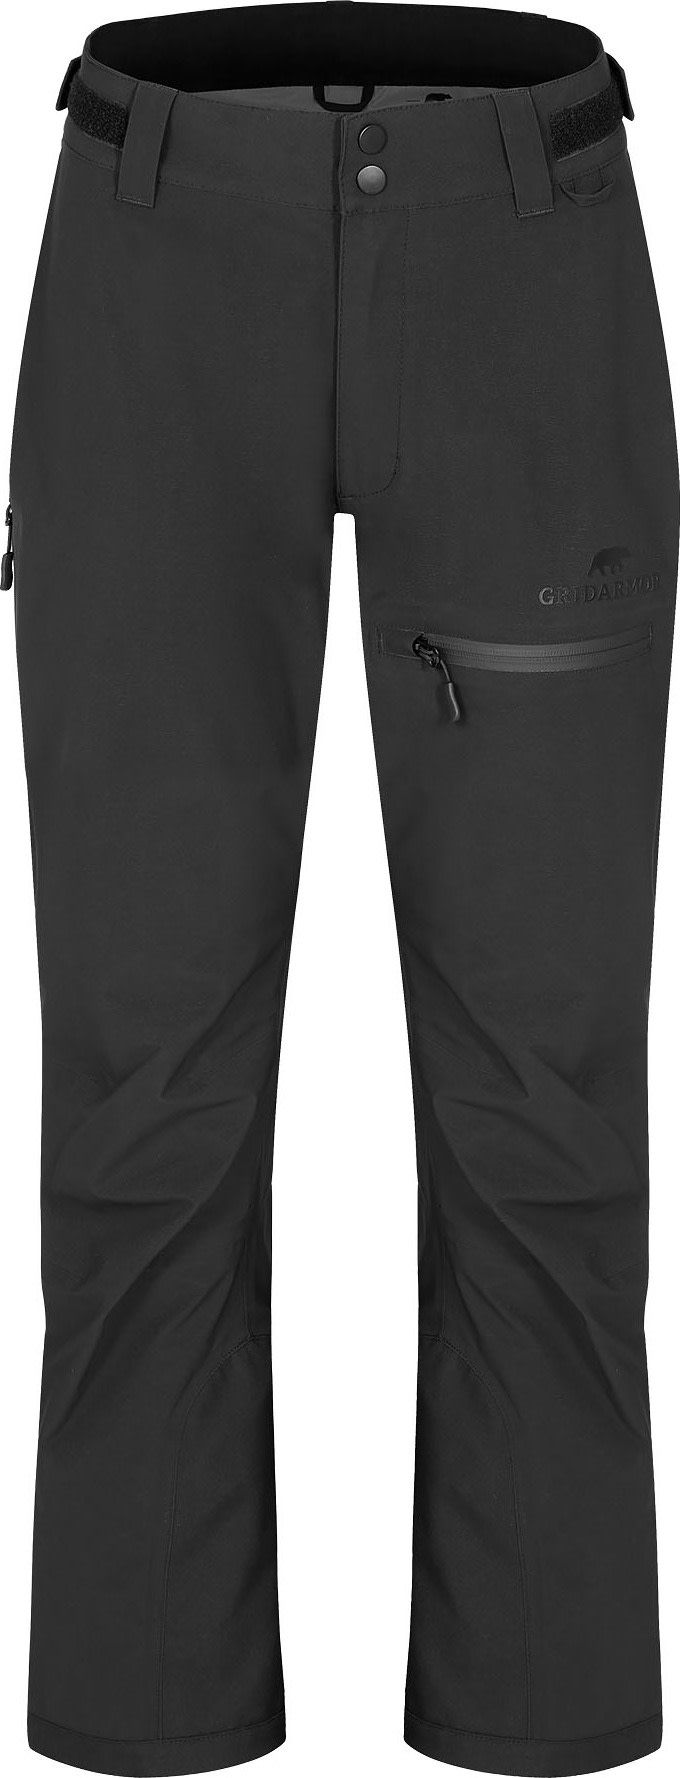 https://www.fjellsport.no/assets/blobs/gridarmor-3-layer-alpine-pants-women-jet-black-7c78e3c5e7.jpeg?preset=tiny&dpr=2